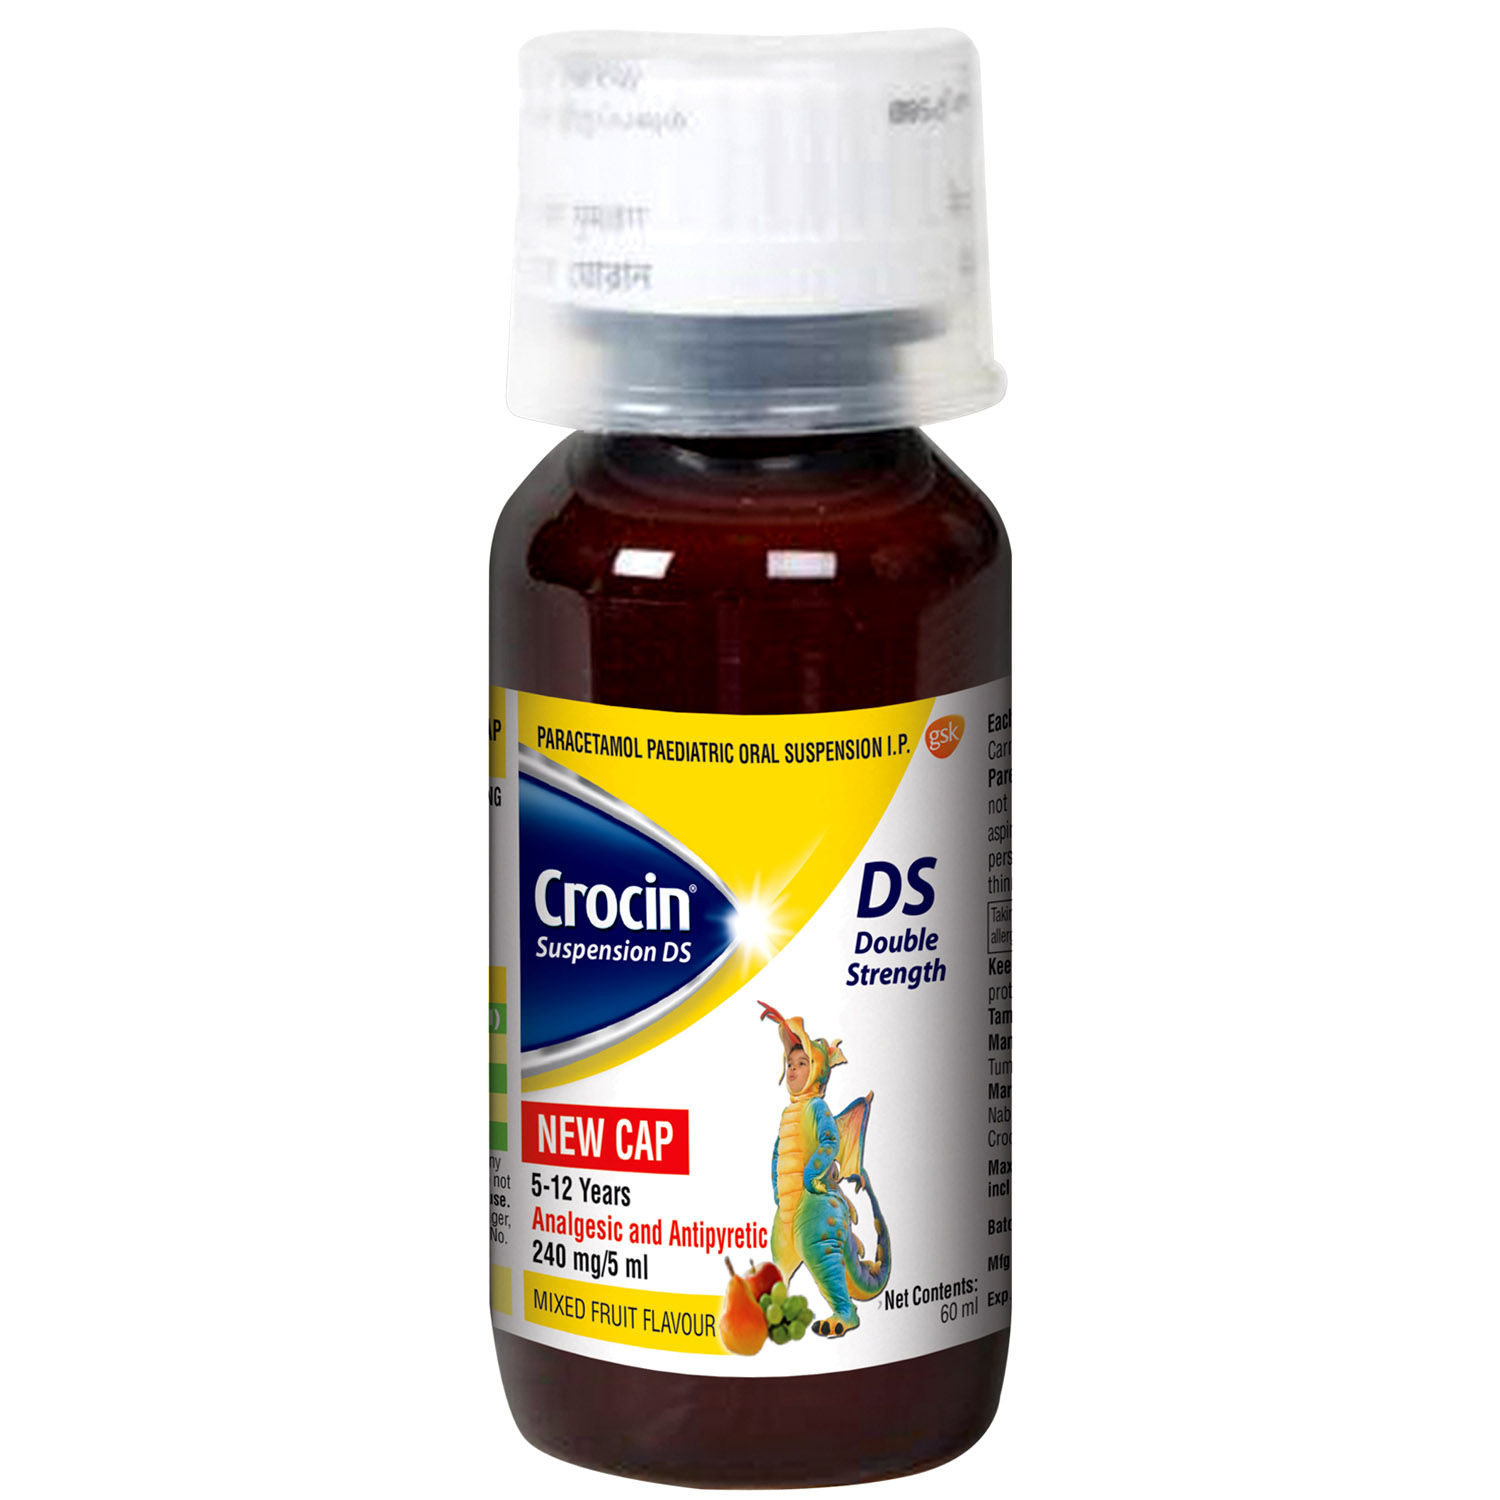 Crocin DS Suspension 60 ml, Pack of 1 SUSPENSION